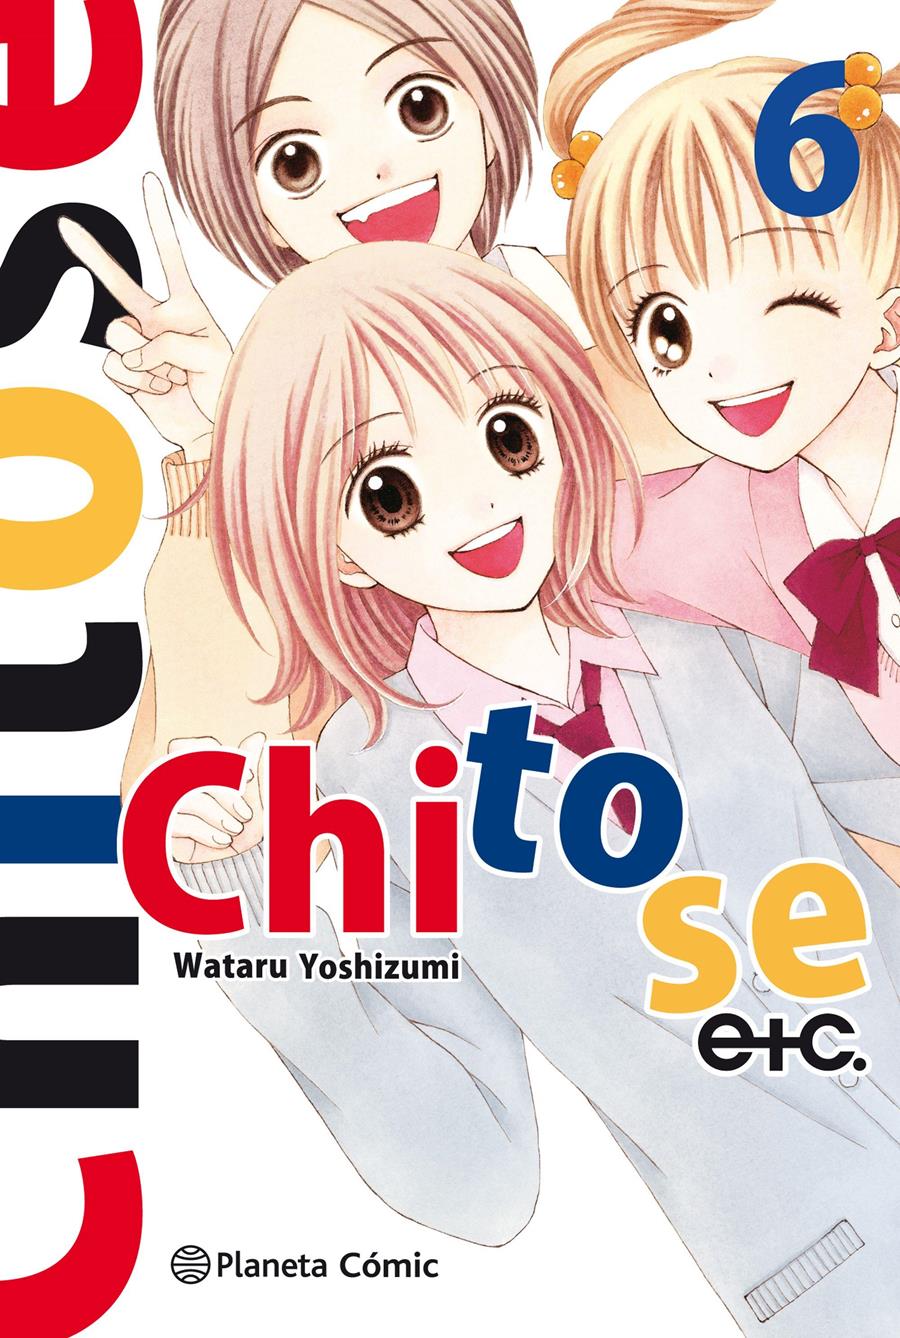 Chitose Etc nº 06/07 | N0318-PLA11 | Wataru Yoshizumi | Terra de Còmic - Tu tienda de cómics online especializada en cómics, manga y merchandising